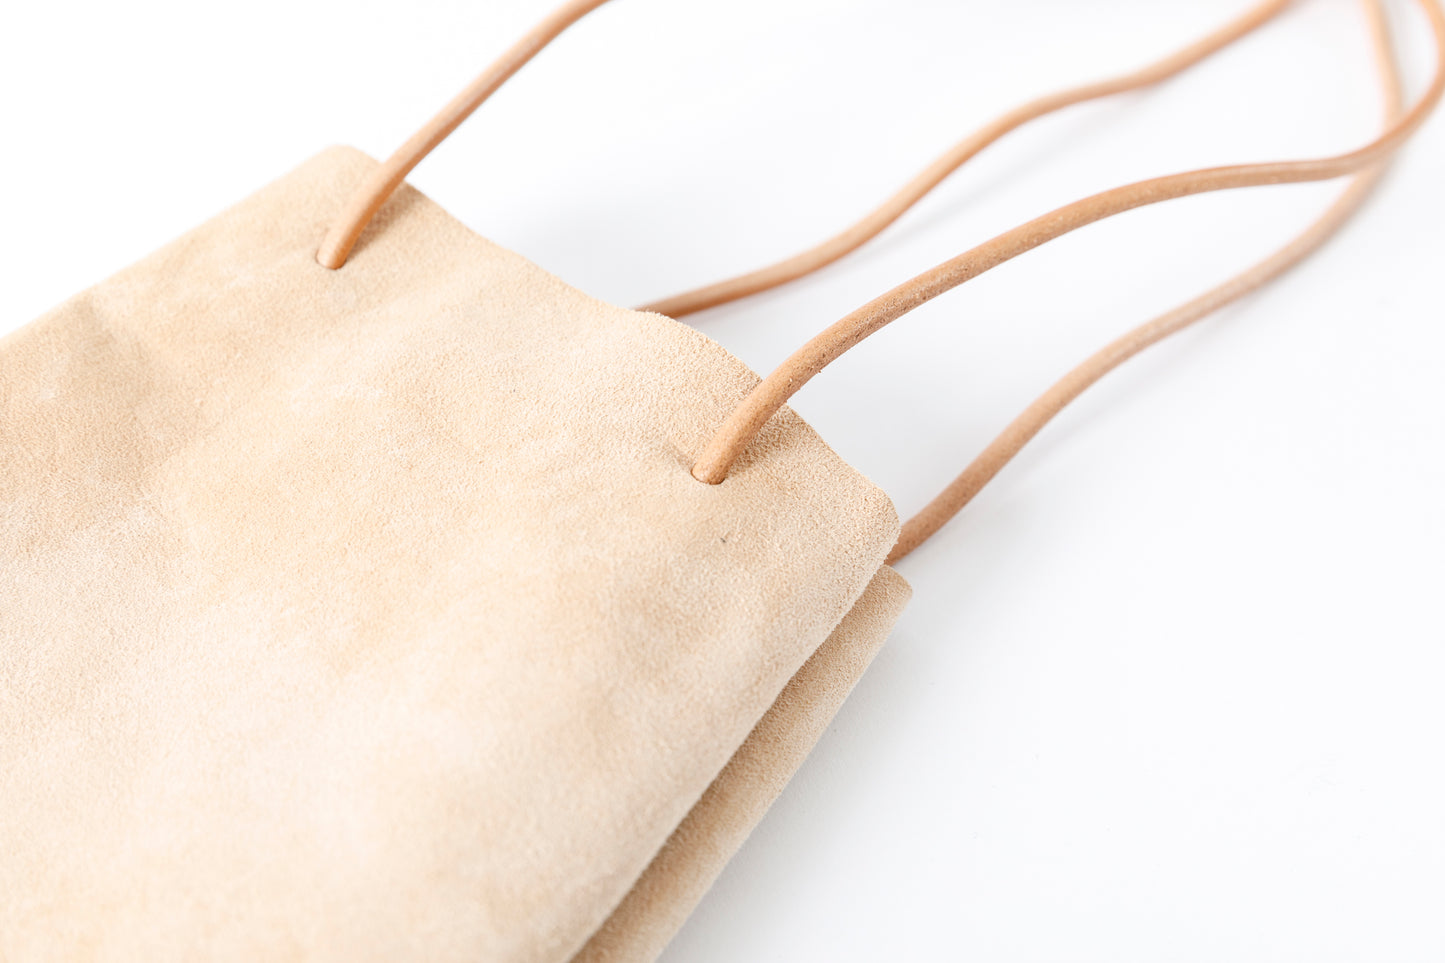 AMIACALVA A015 Calf Drawstring bag(M) - Natural